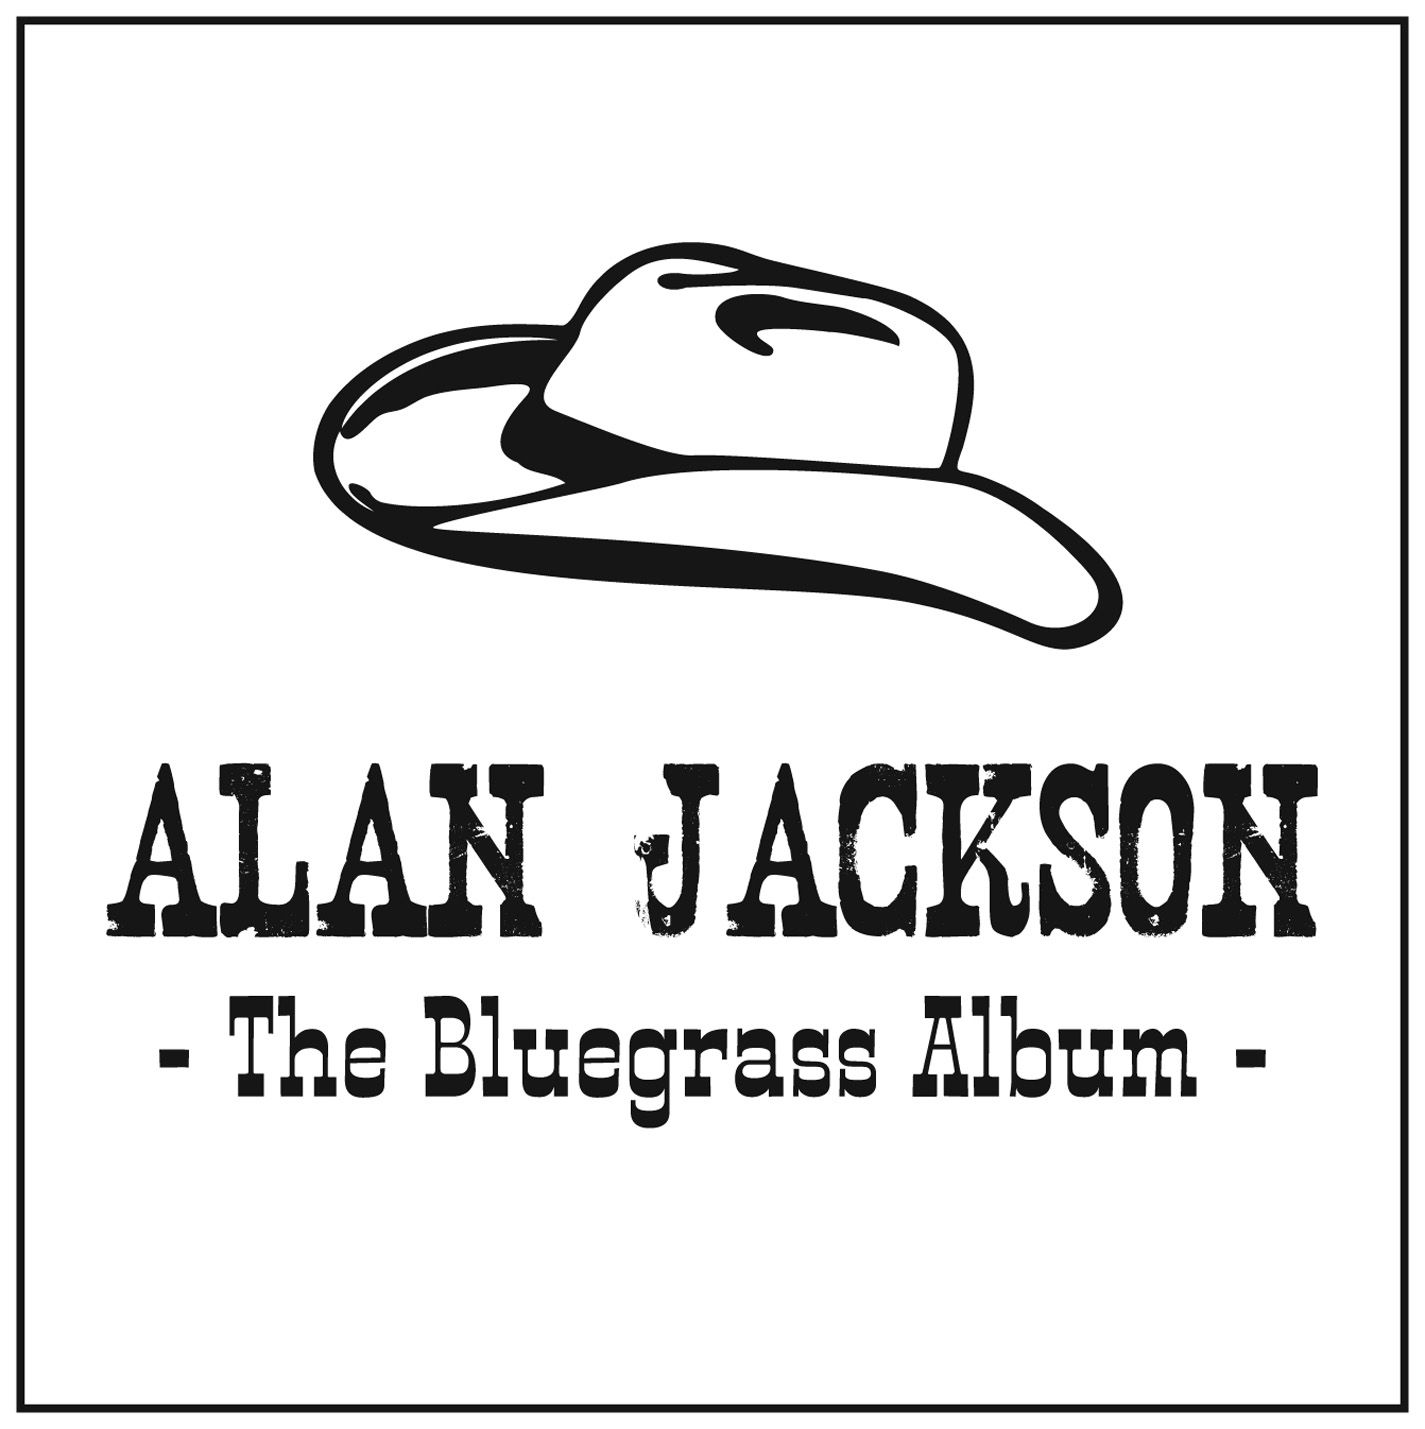 Alan Jackson Releases A Bluegrass Album